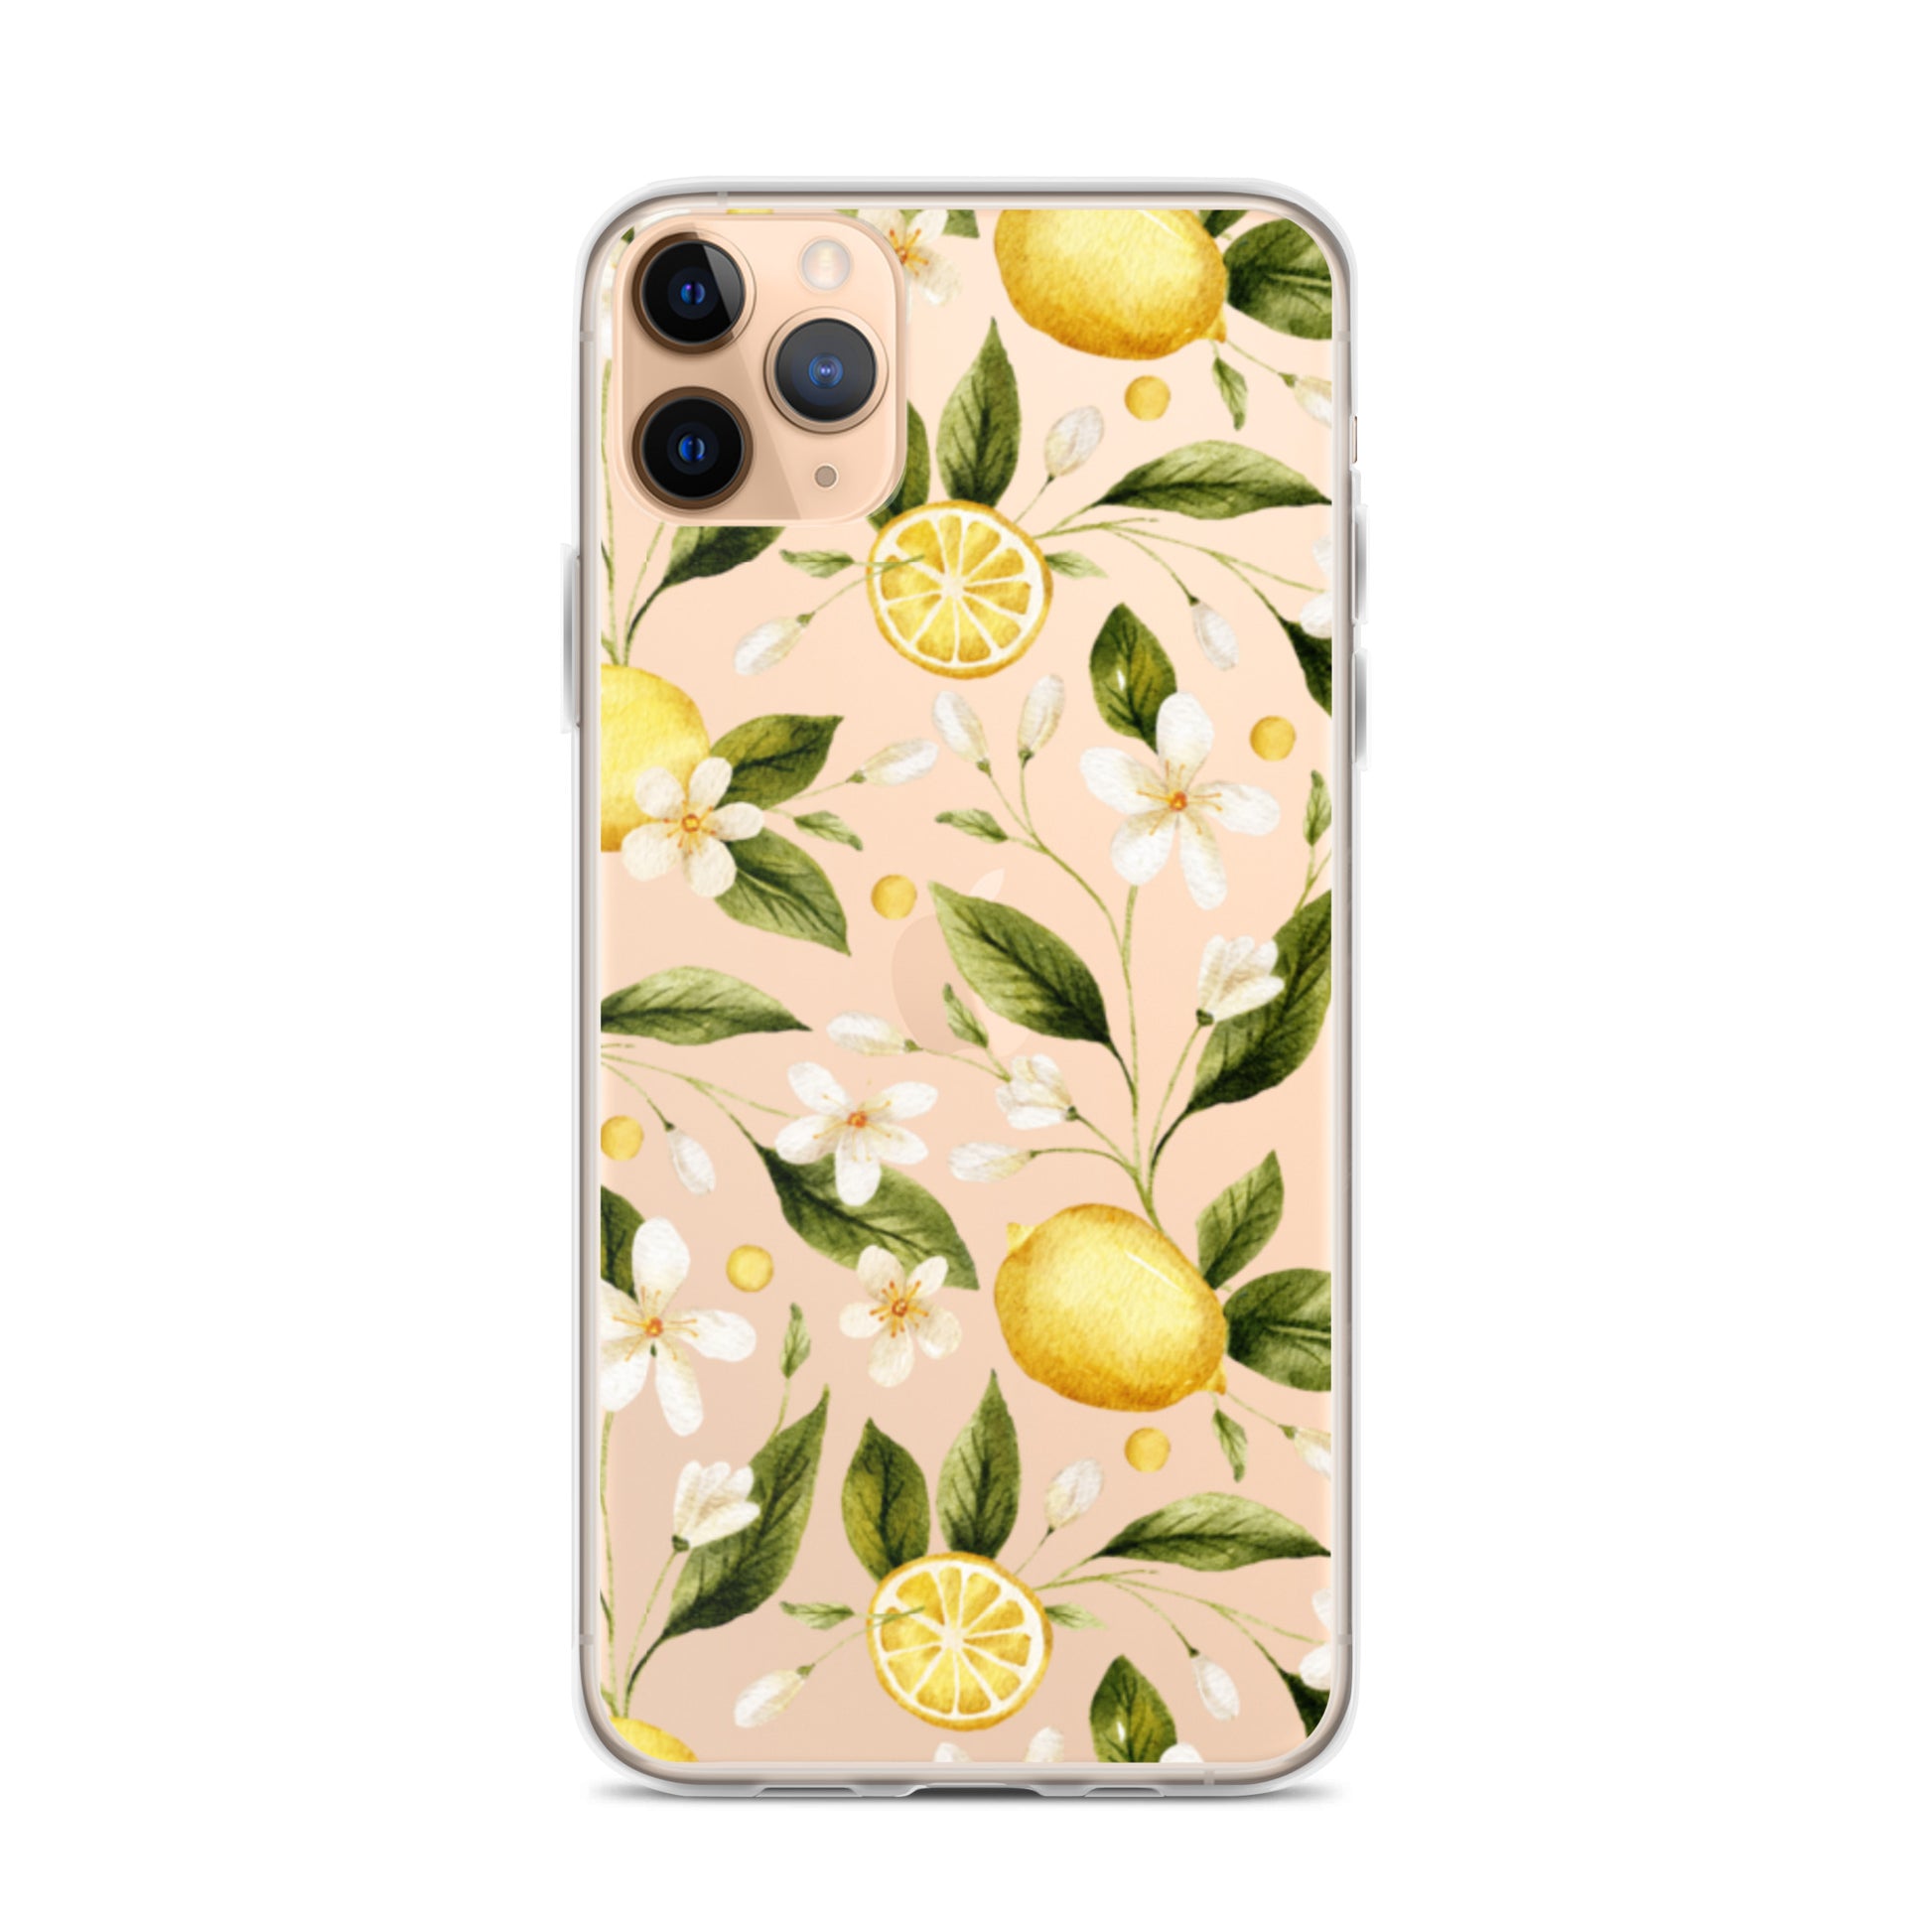 Lemon Garden Clear iPhone Case iPhone 11 Pro Max